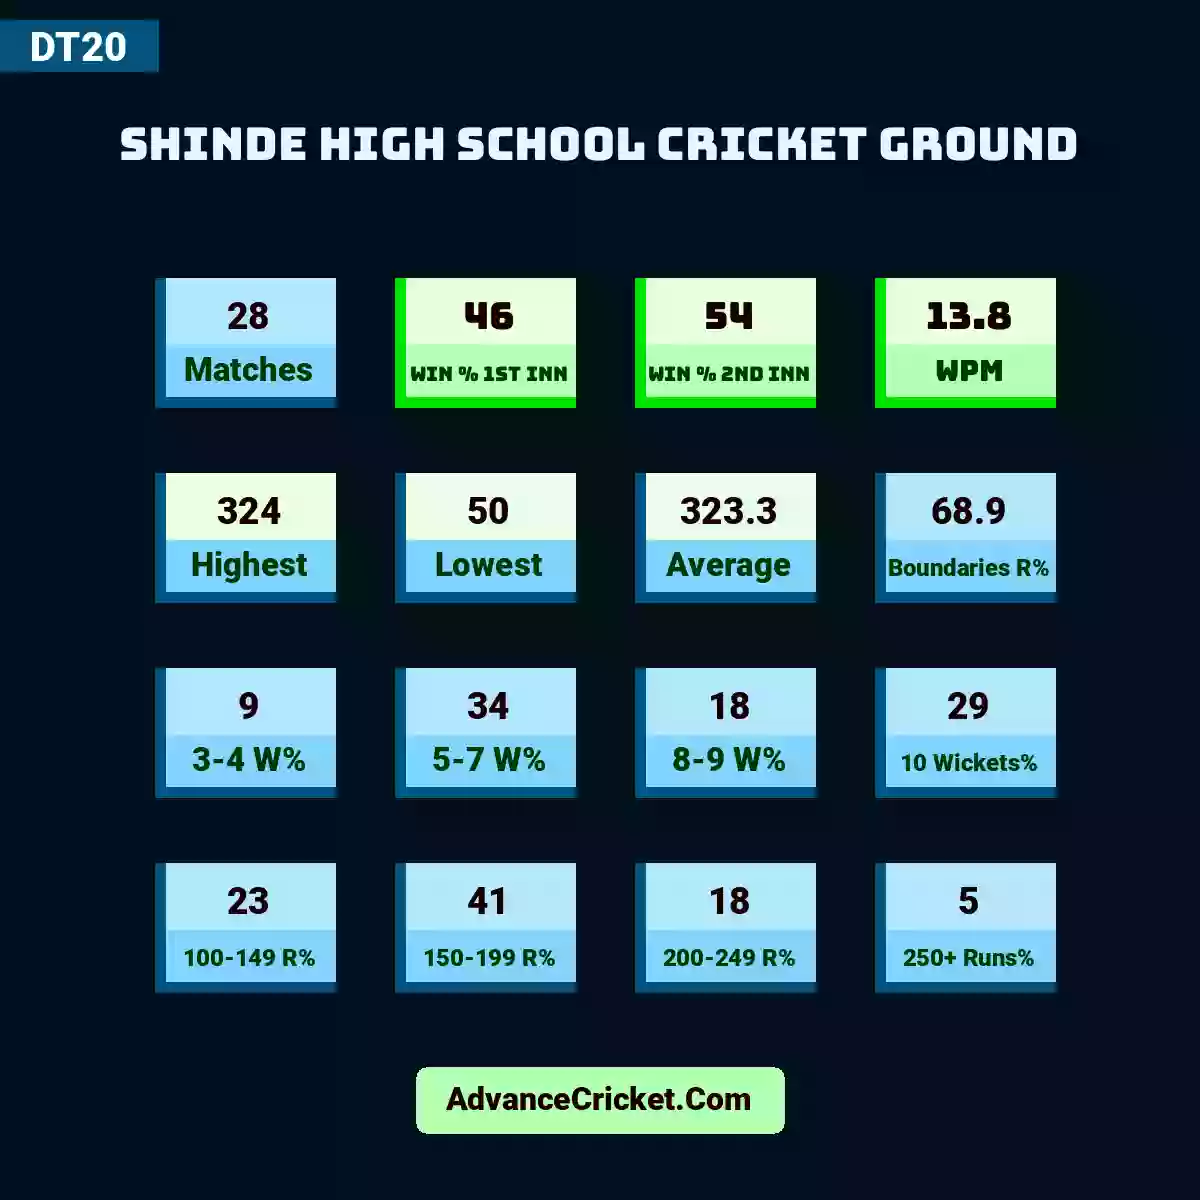 Image showing Shinde High School Cricket Ground DT20 with Matches: 27, Win % 1st Inn: 48, Win % 2nd Inn: 52, WPM: 13.8, Highest: 324, Lowest: 50, Average: 329.8, Boundaries R%: 69, 3-4 W%: 7, 5-7 W%: 35, 8-9 W%: 19, 10 Wickets%: 28, 100-149 R%: 24, 150-199 R%: 43, 200-249 R%: 19, 250+ Runs%: 6.